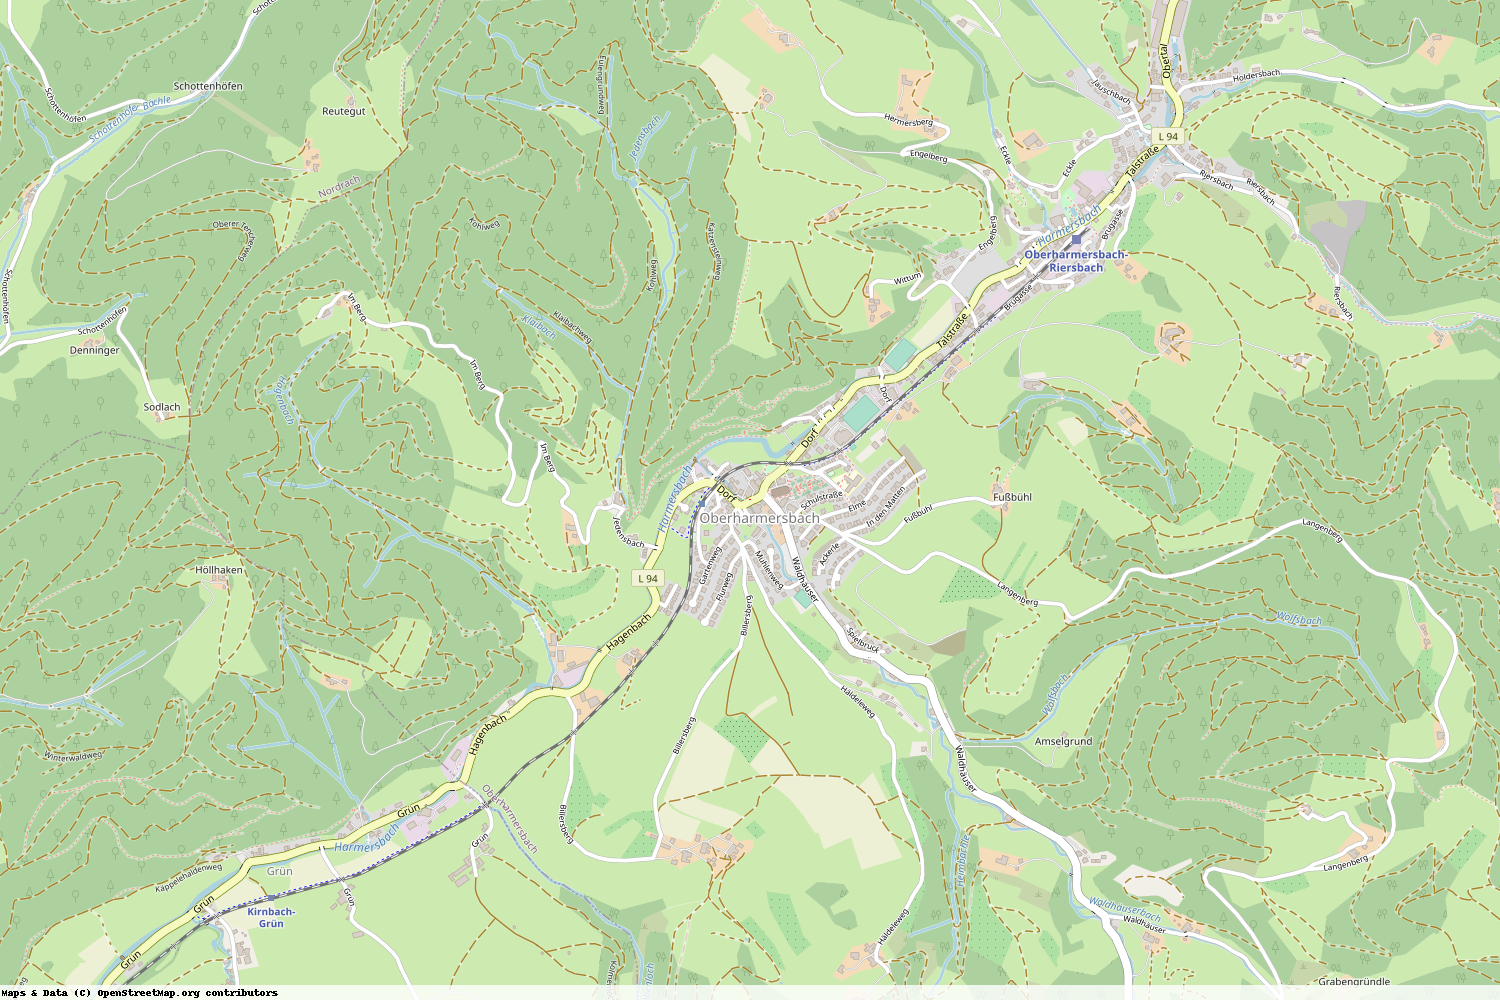 Ist gerade Stromausfall in Baden-Württemberg - Ortenaukreis - Oberharmersbach?